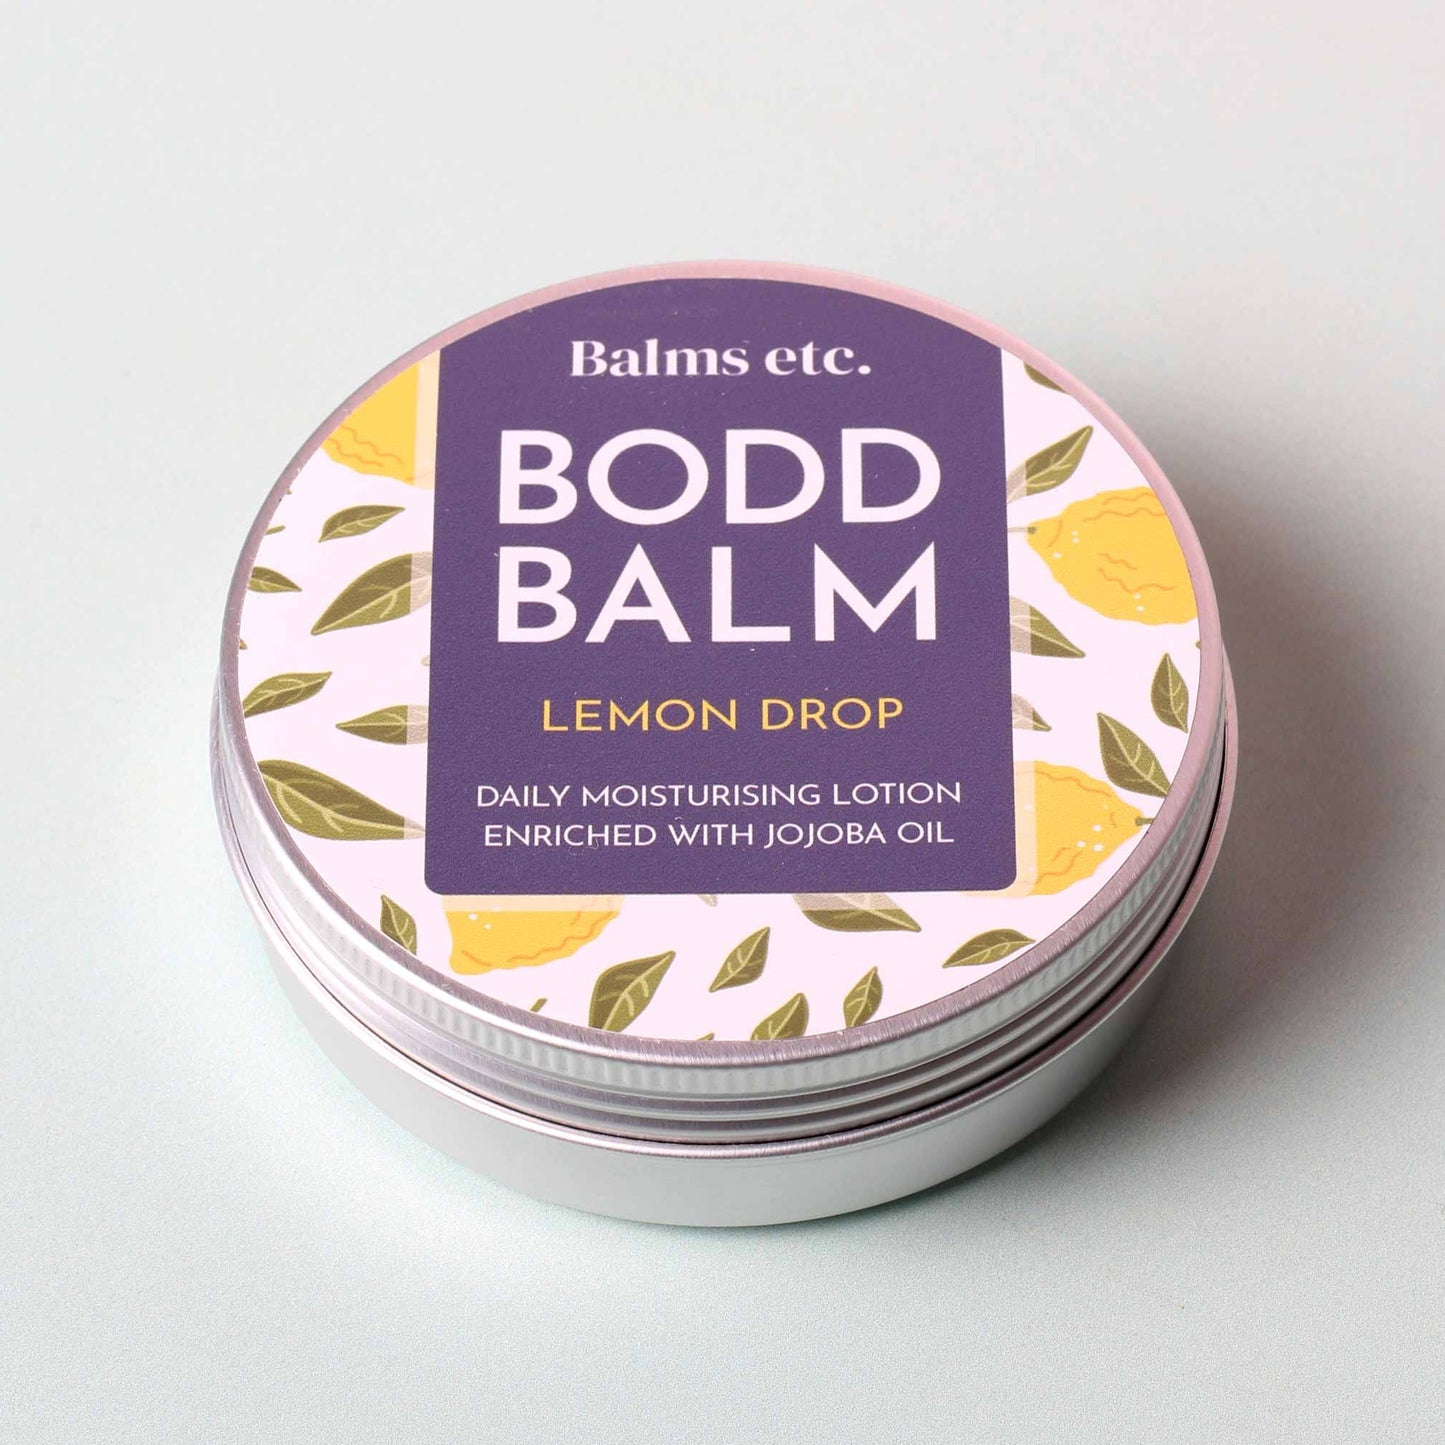 Balms etc.  BODD BALM - Lemon Drop Daily Moisturising Lotion